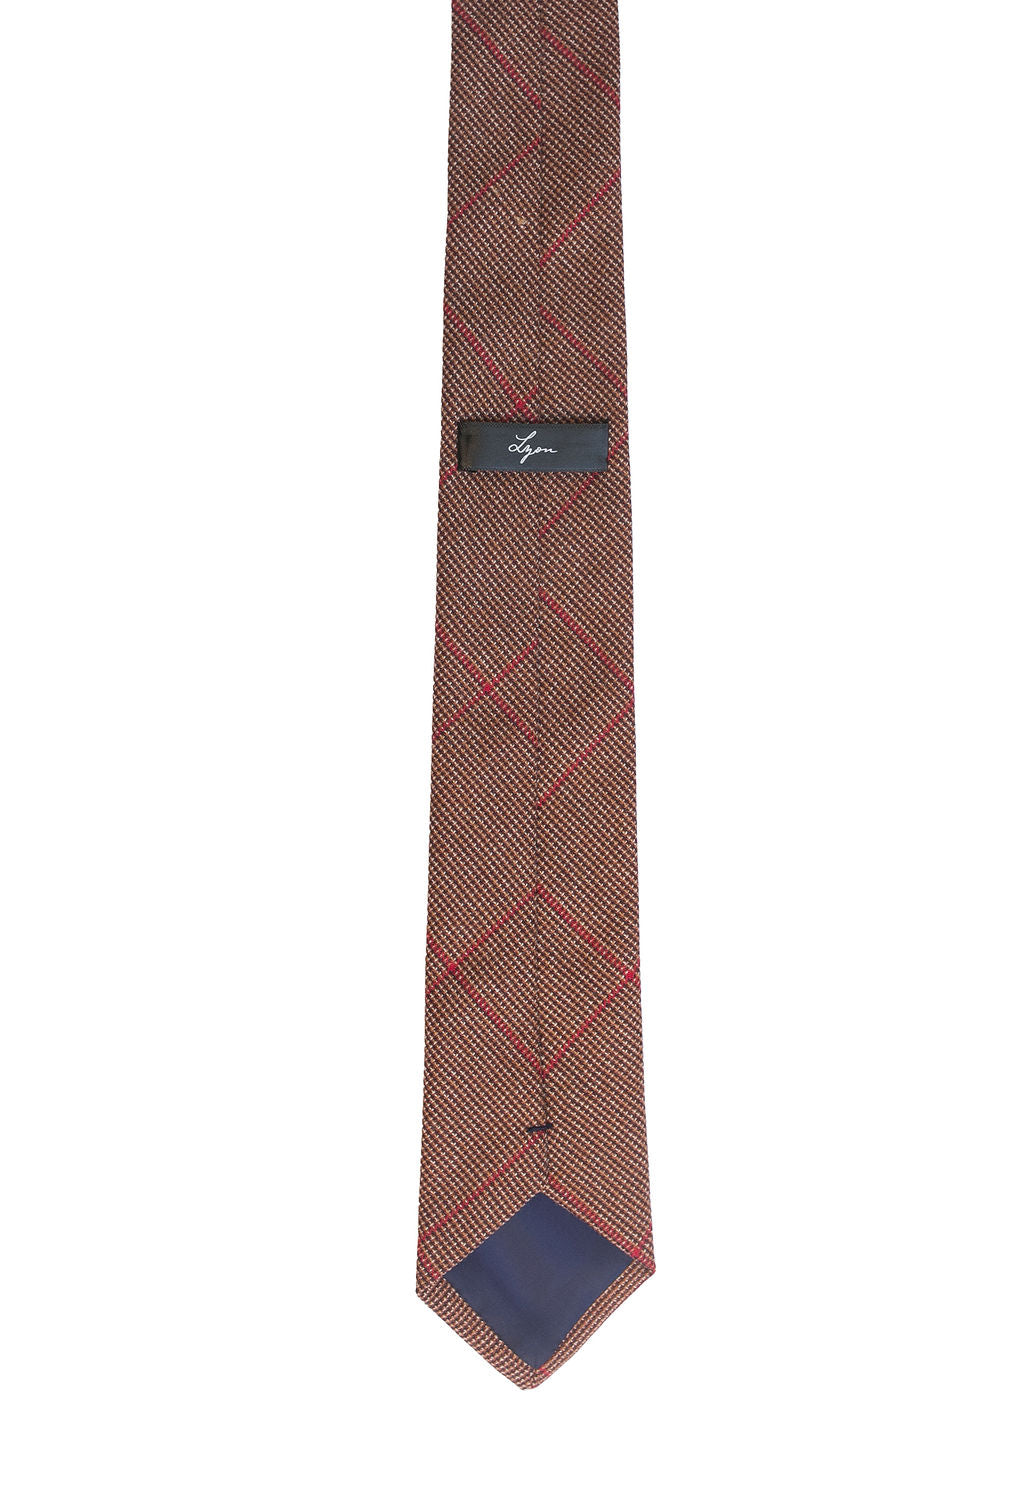 Highland Window Pane Tie